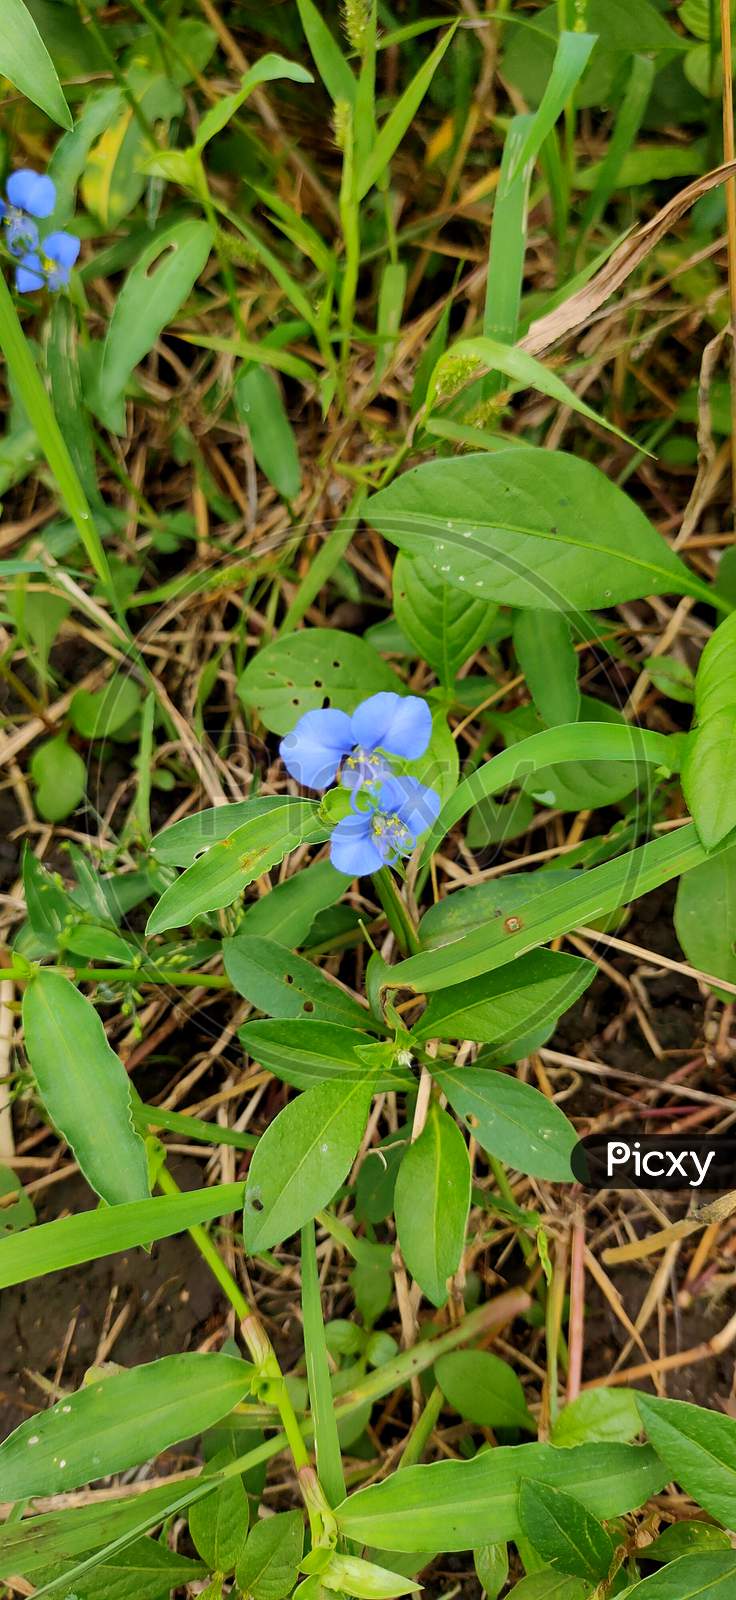 Tiny blue flowers in a farm